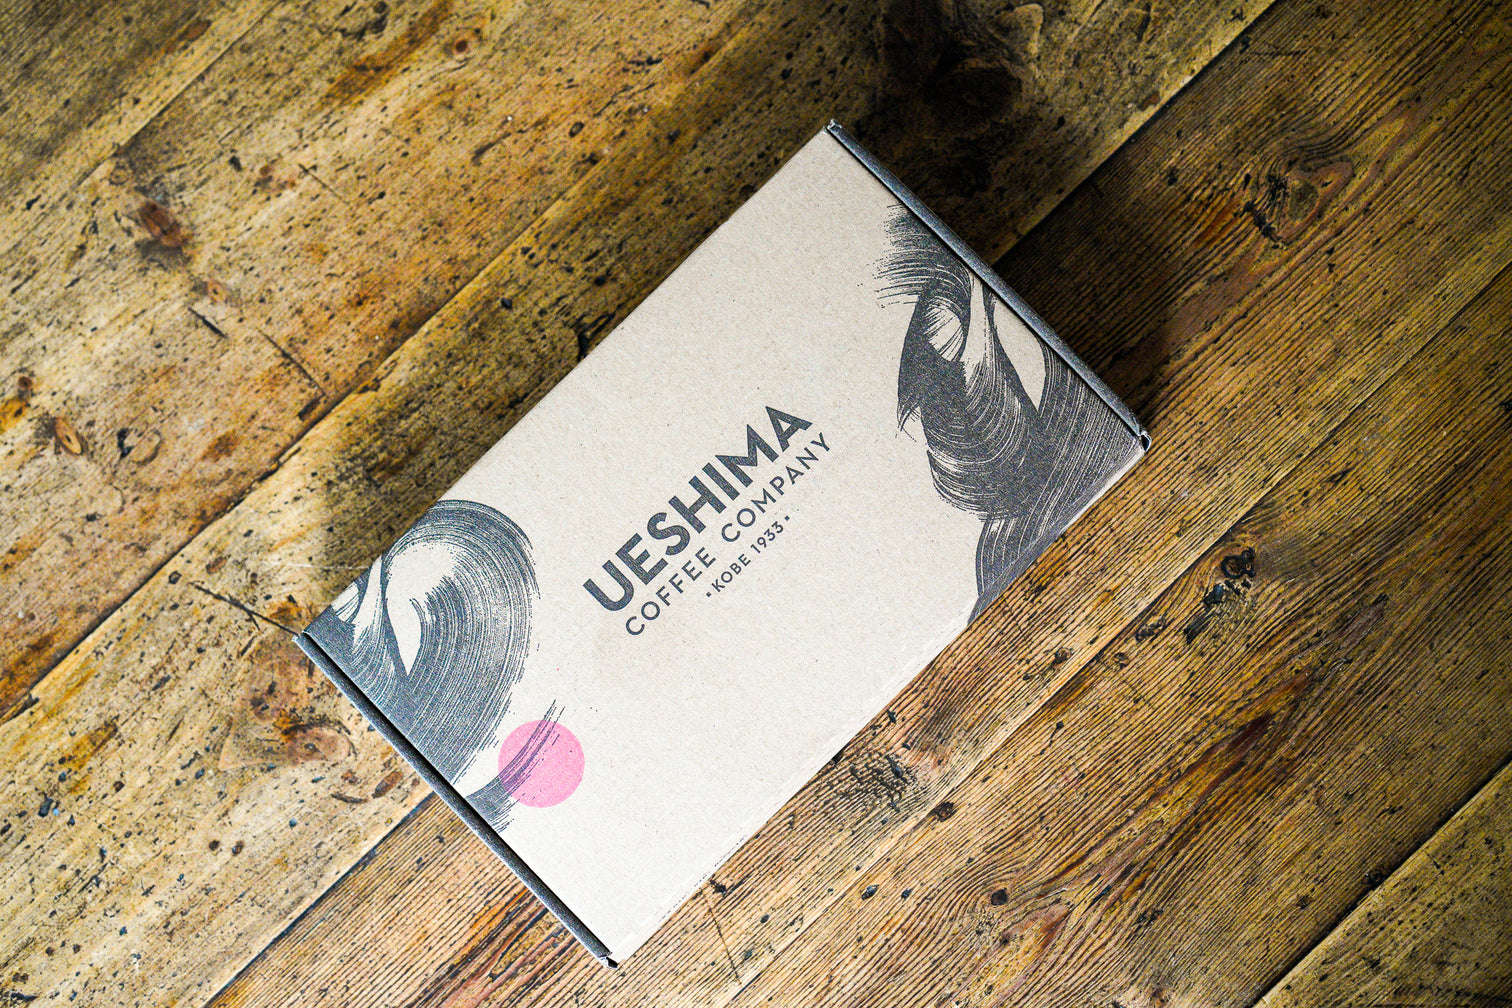 Ueshima Coffee gifting guide